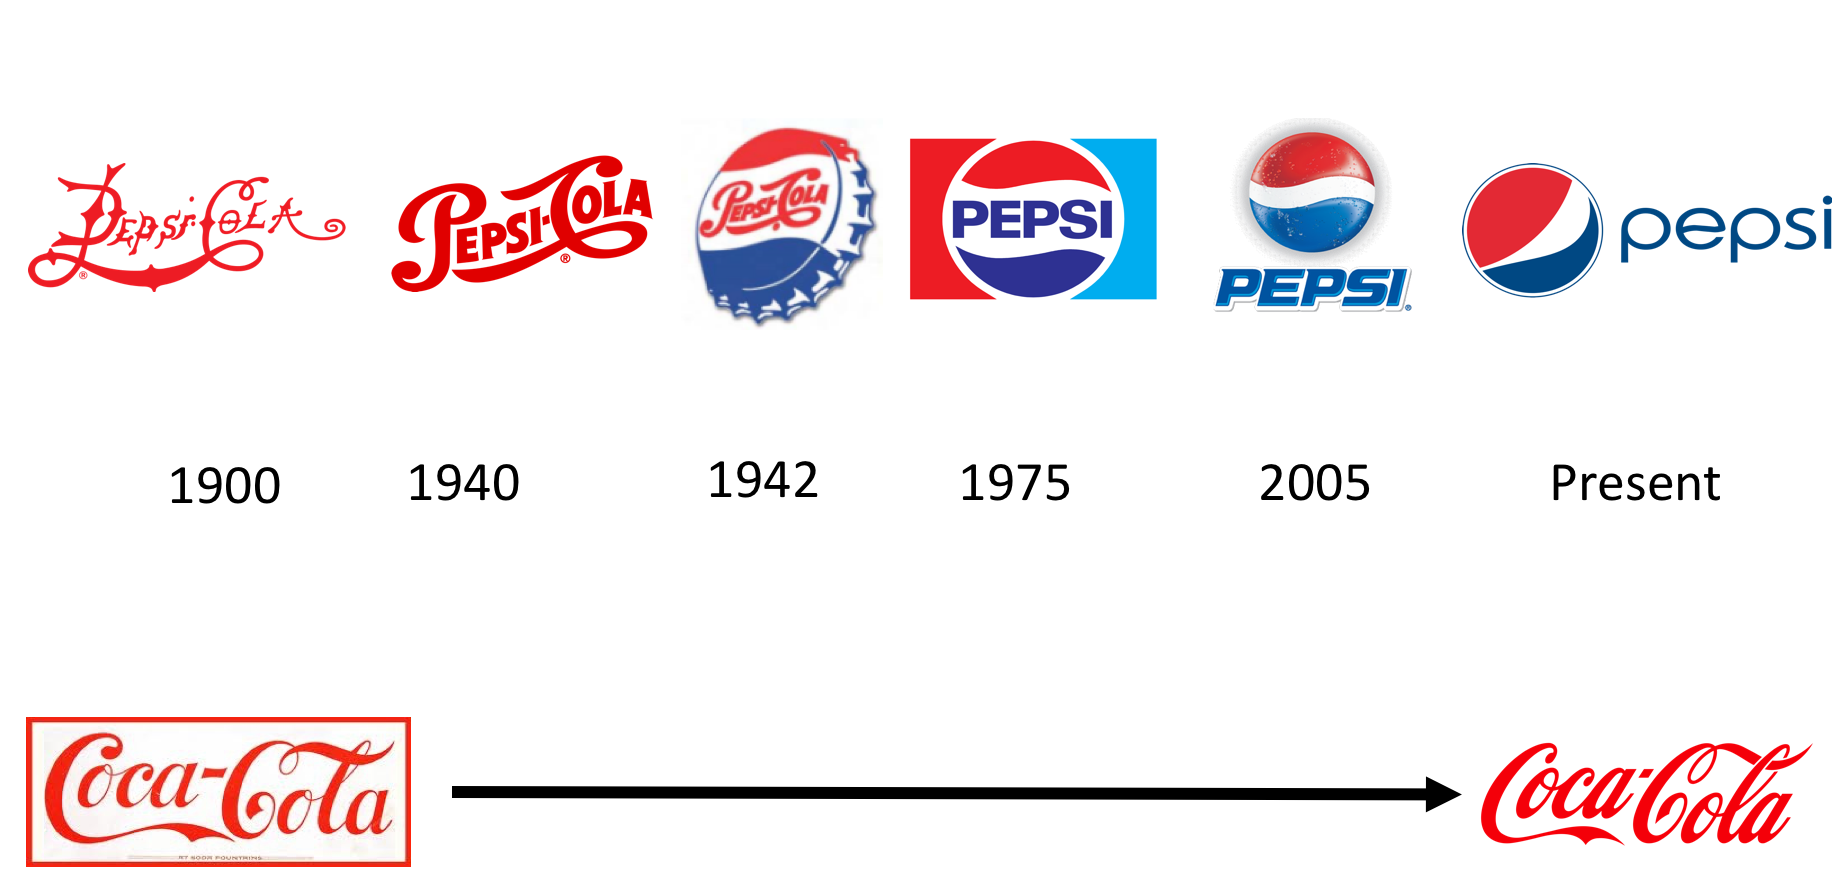 Coke and Pepsi logos